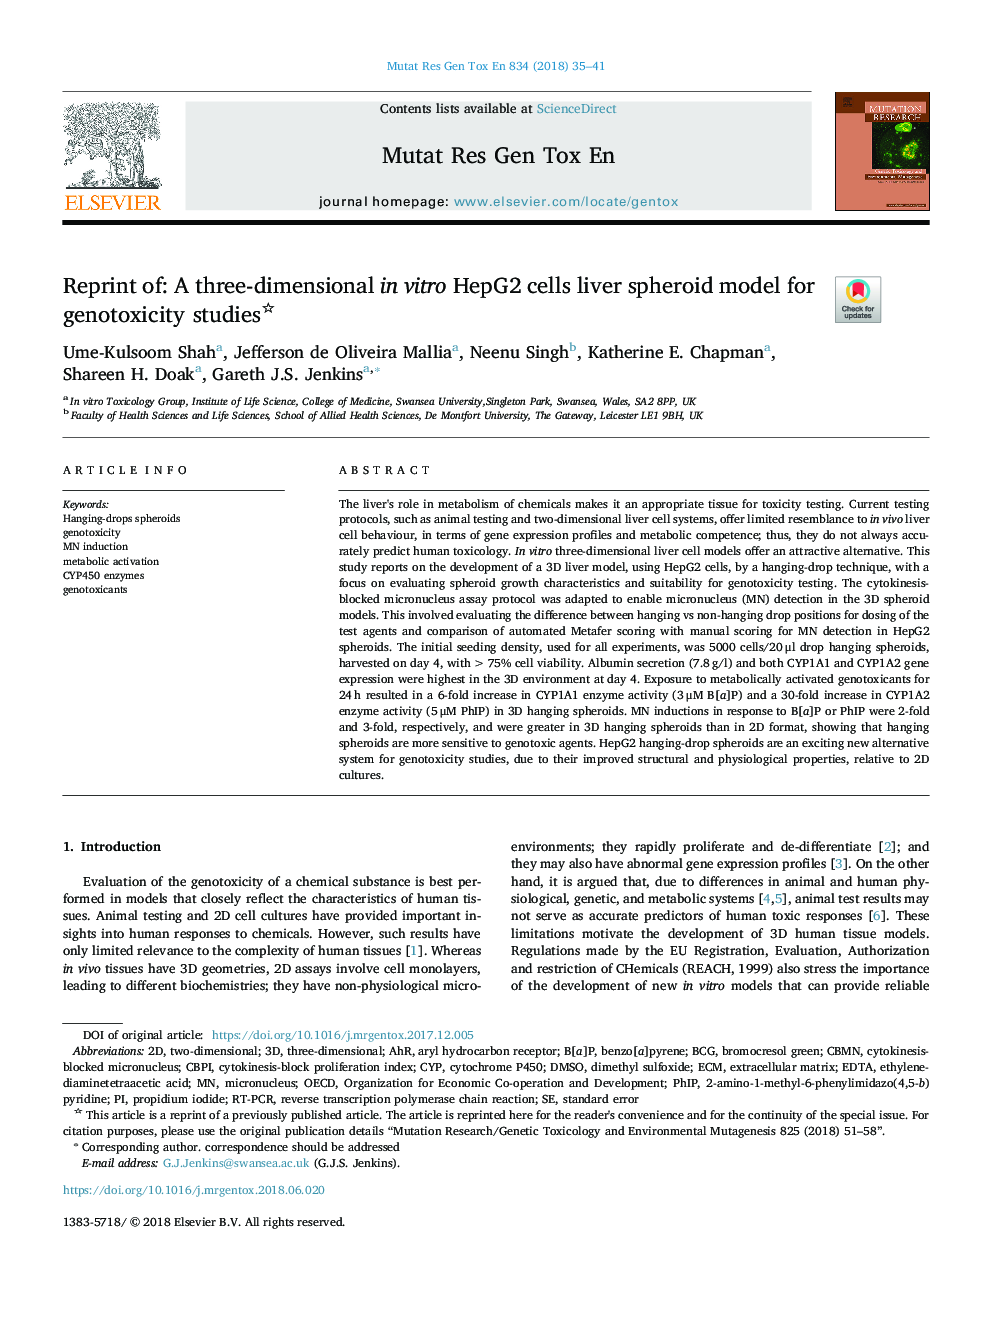 Reprint of: A three-dimensional in vitro HepG2 cells liver spheroid model for genotoxicity studies